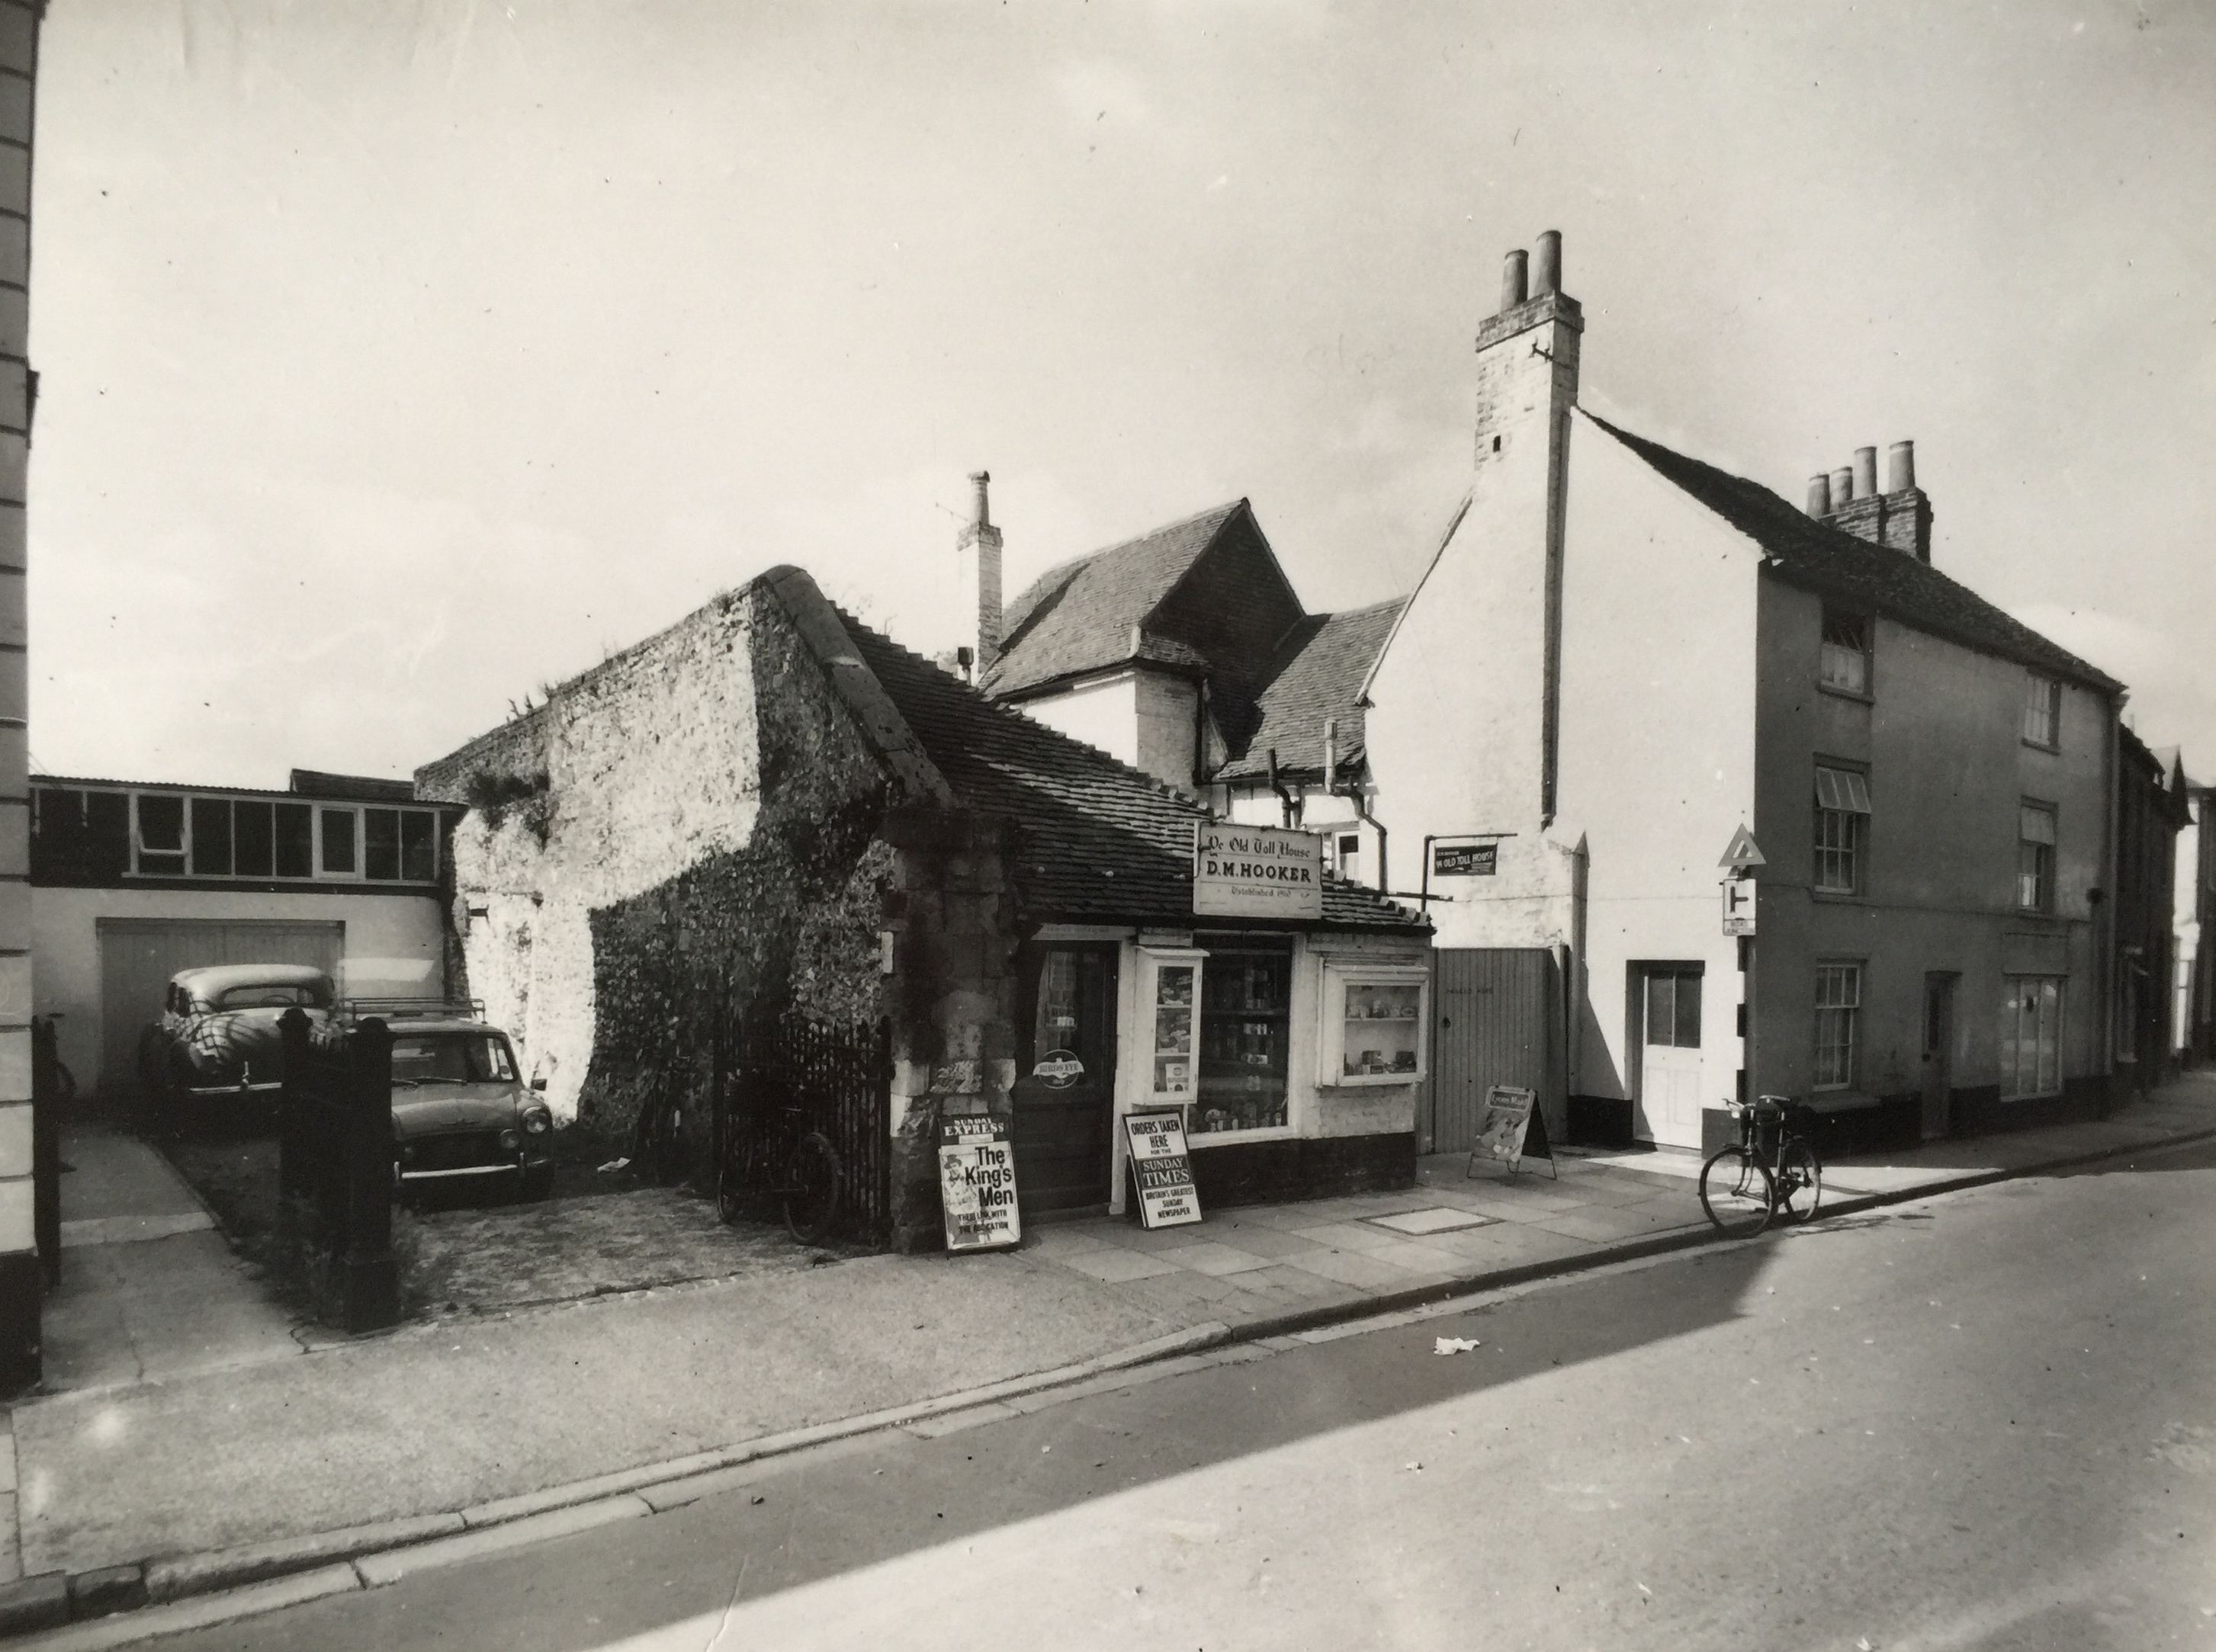 Hooker's Shop looking along Westgate August 1963 - Collection Ken Green